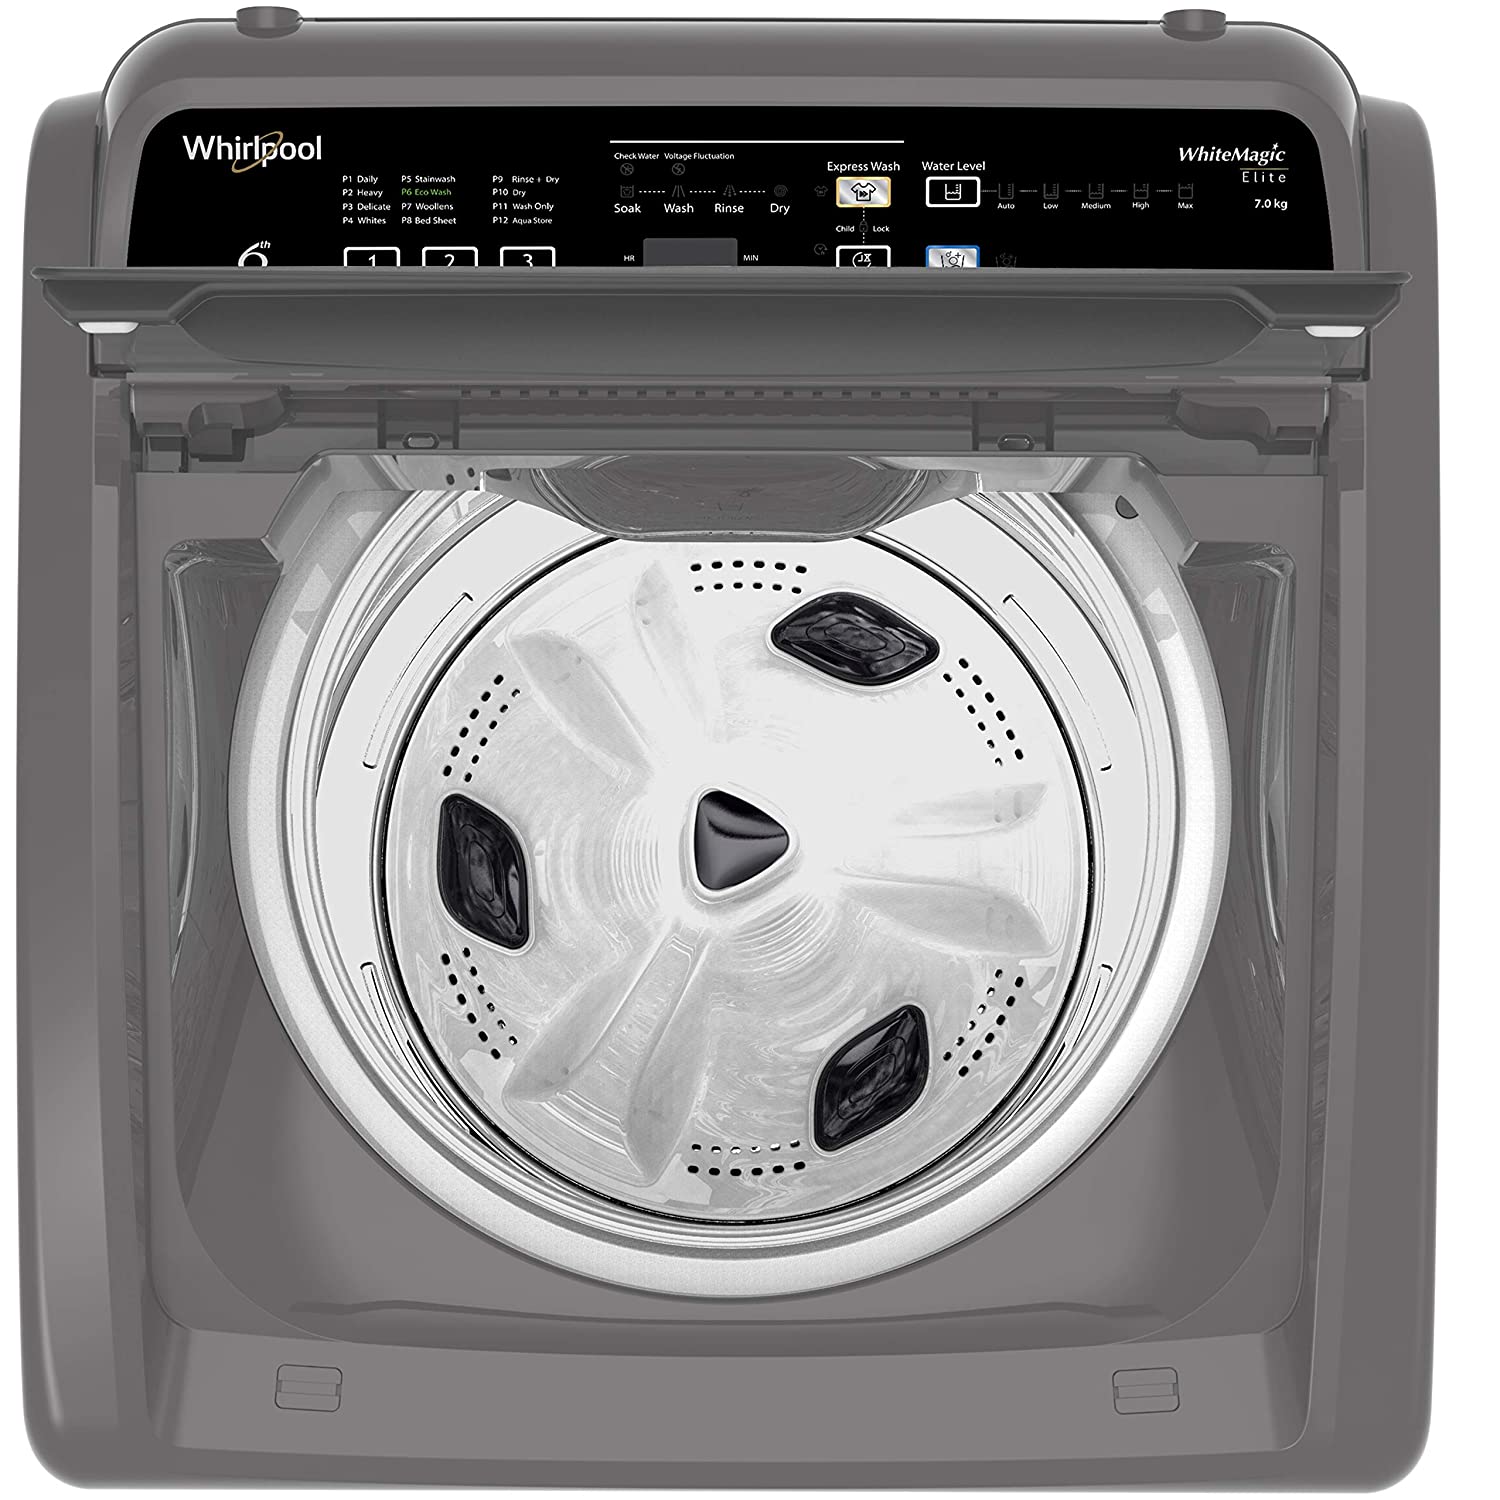 Whirlpool 7 kg 5 Star Fully-Automatic Top Loading Washing Machine (WHITEMAGIC ELITE 7.0, Grey, Hard Water Wash)